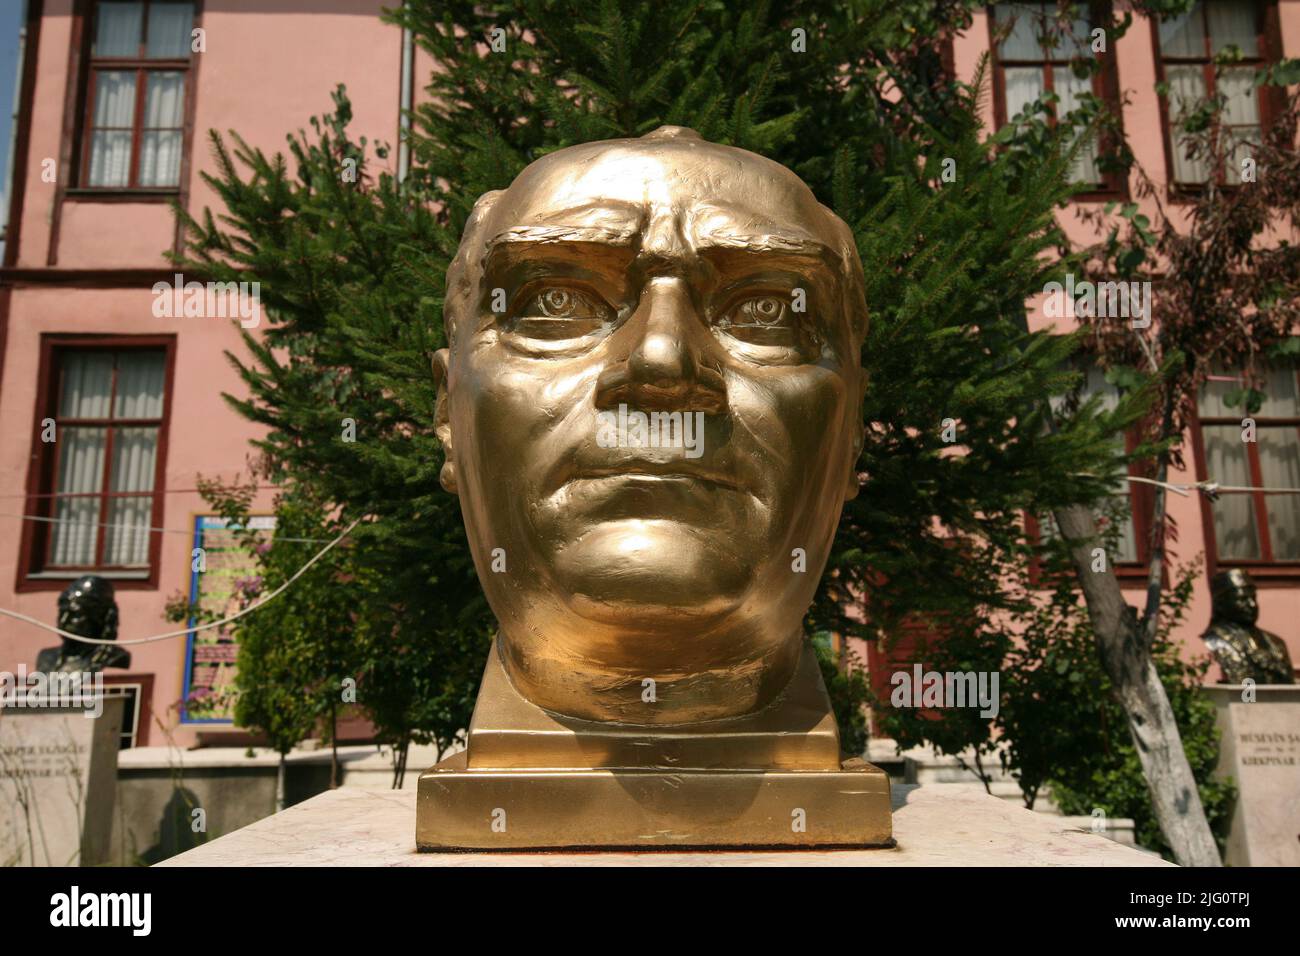 Gilded bust of Mustafa Kemal Atatürk installed in front of the Kırkpınar House (Turkish Oil Wrestling Museum) in Edirne, Turkey. Stock Photo